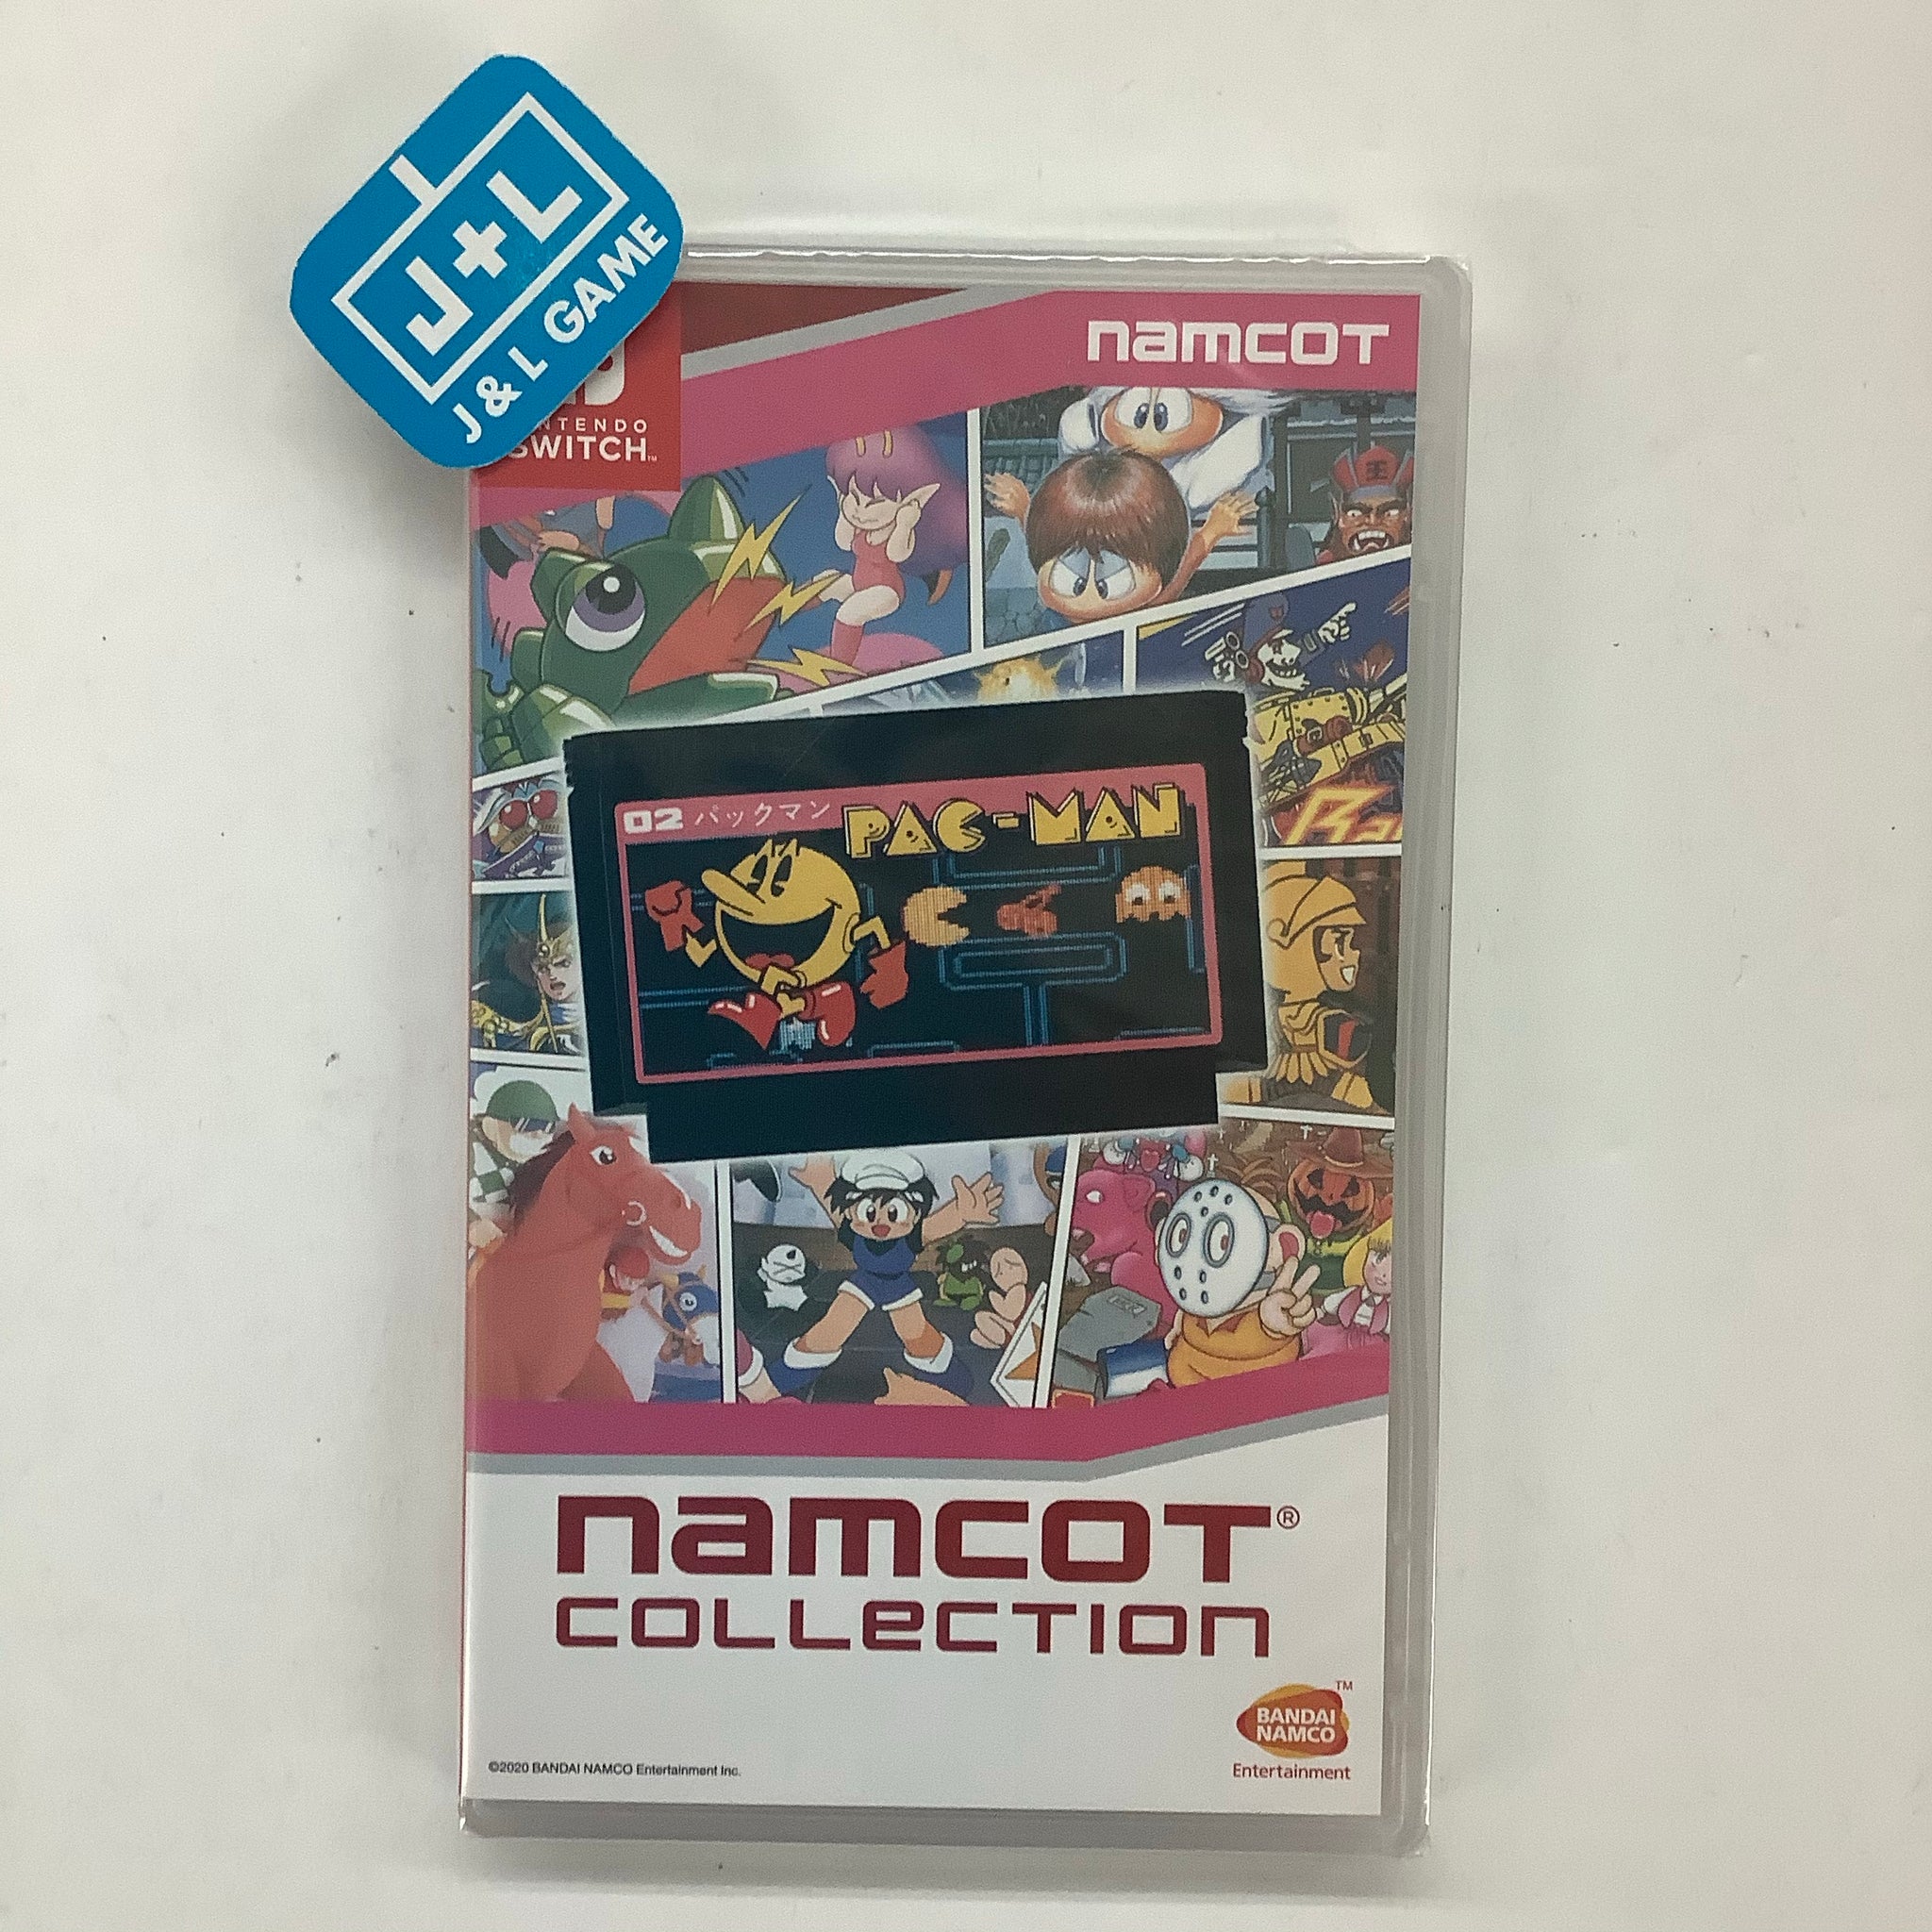 Namcot Collection - (NSW) Nintendo Switch (Japanese Import) Video Games Bandai Namco Games   